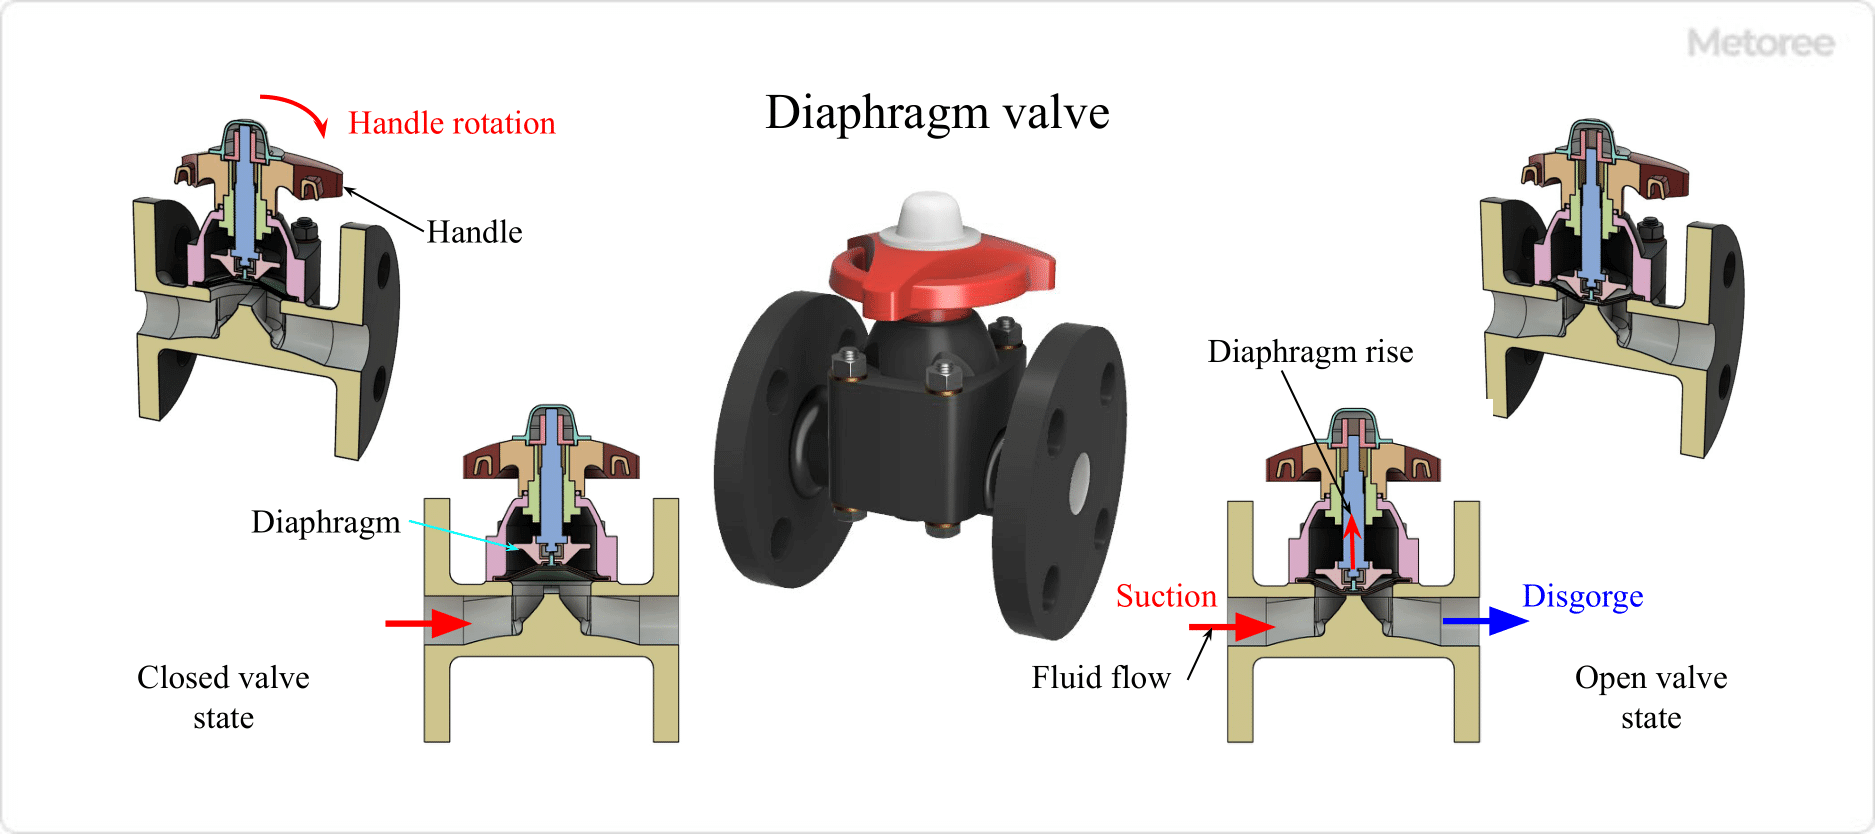 Figure 6. Diaphragm valve